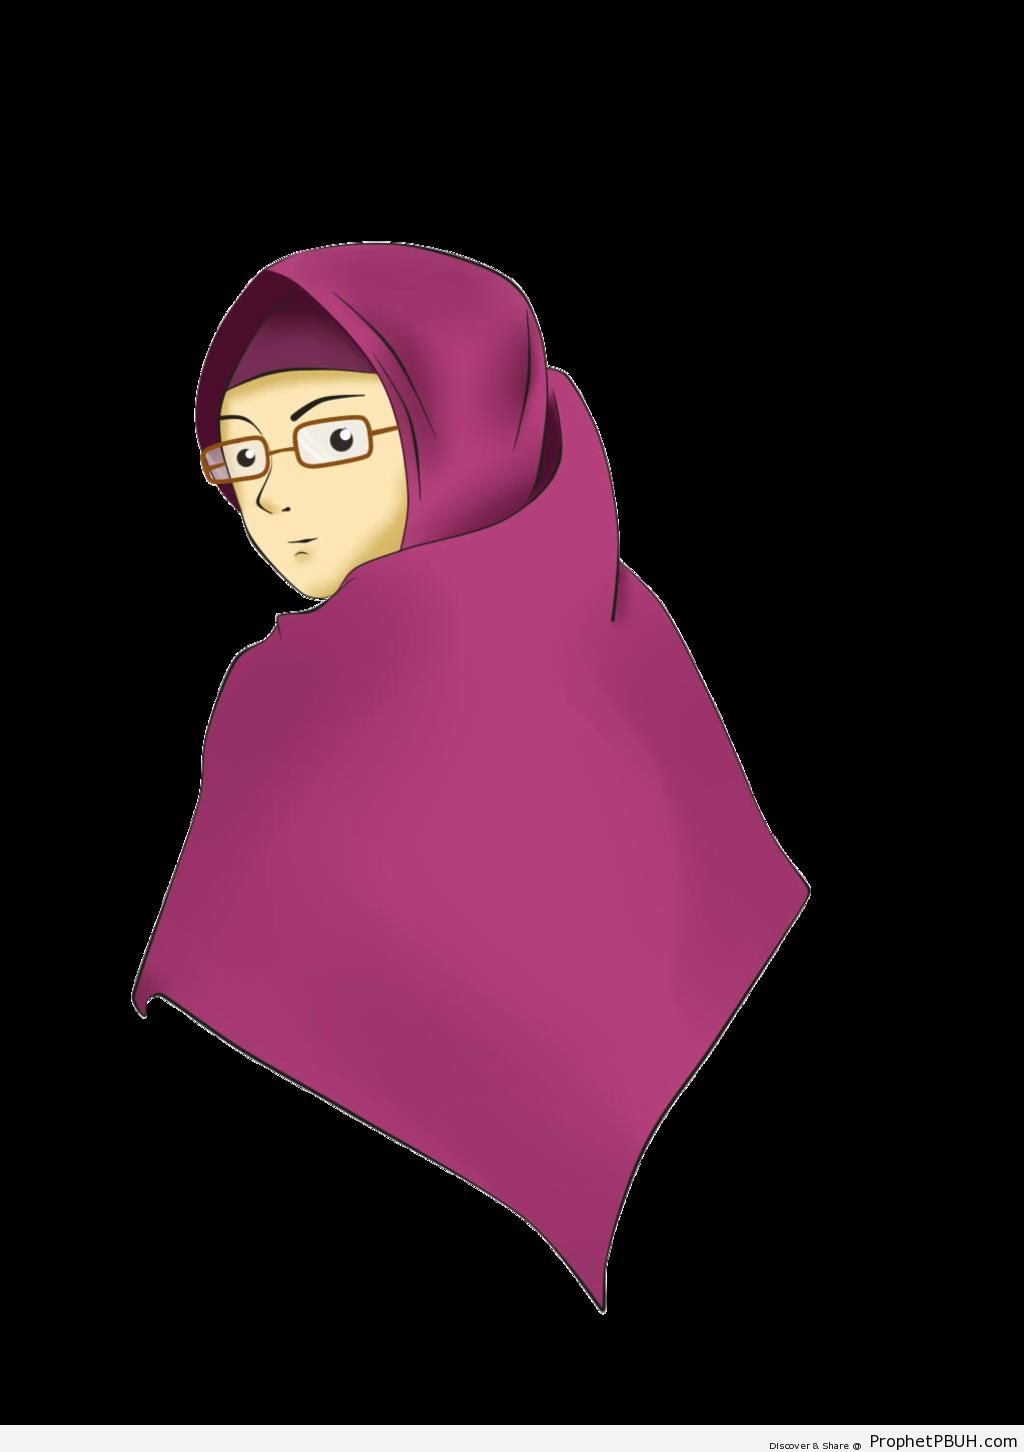 Muslimah Wearing Purple Hijab and Glasses - Drawings 